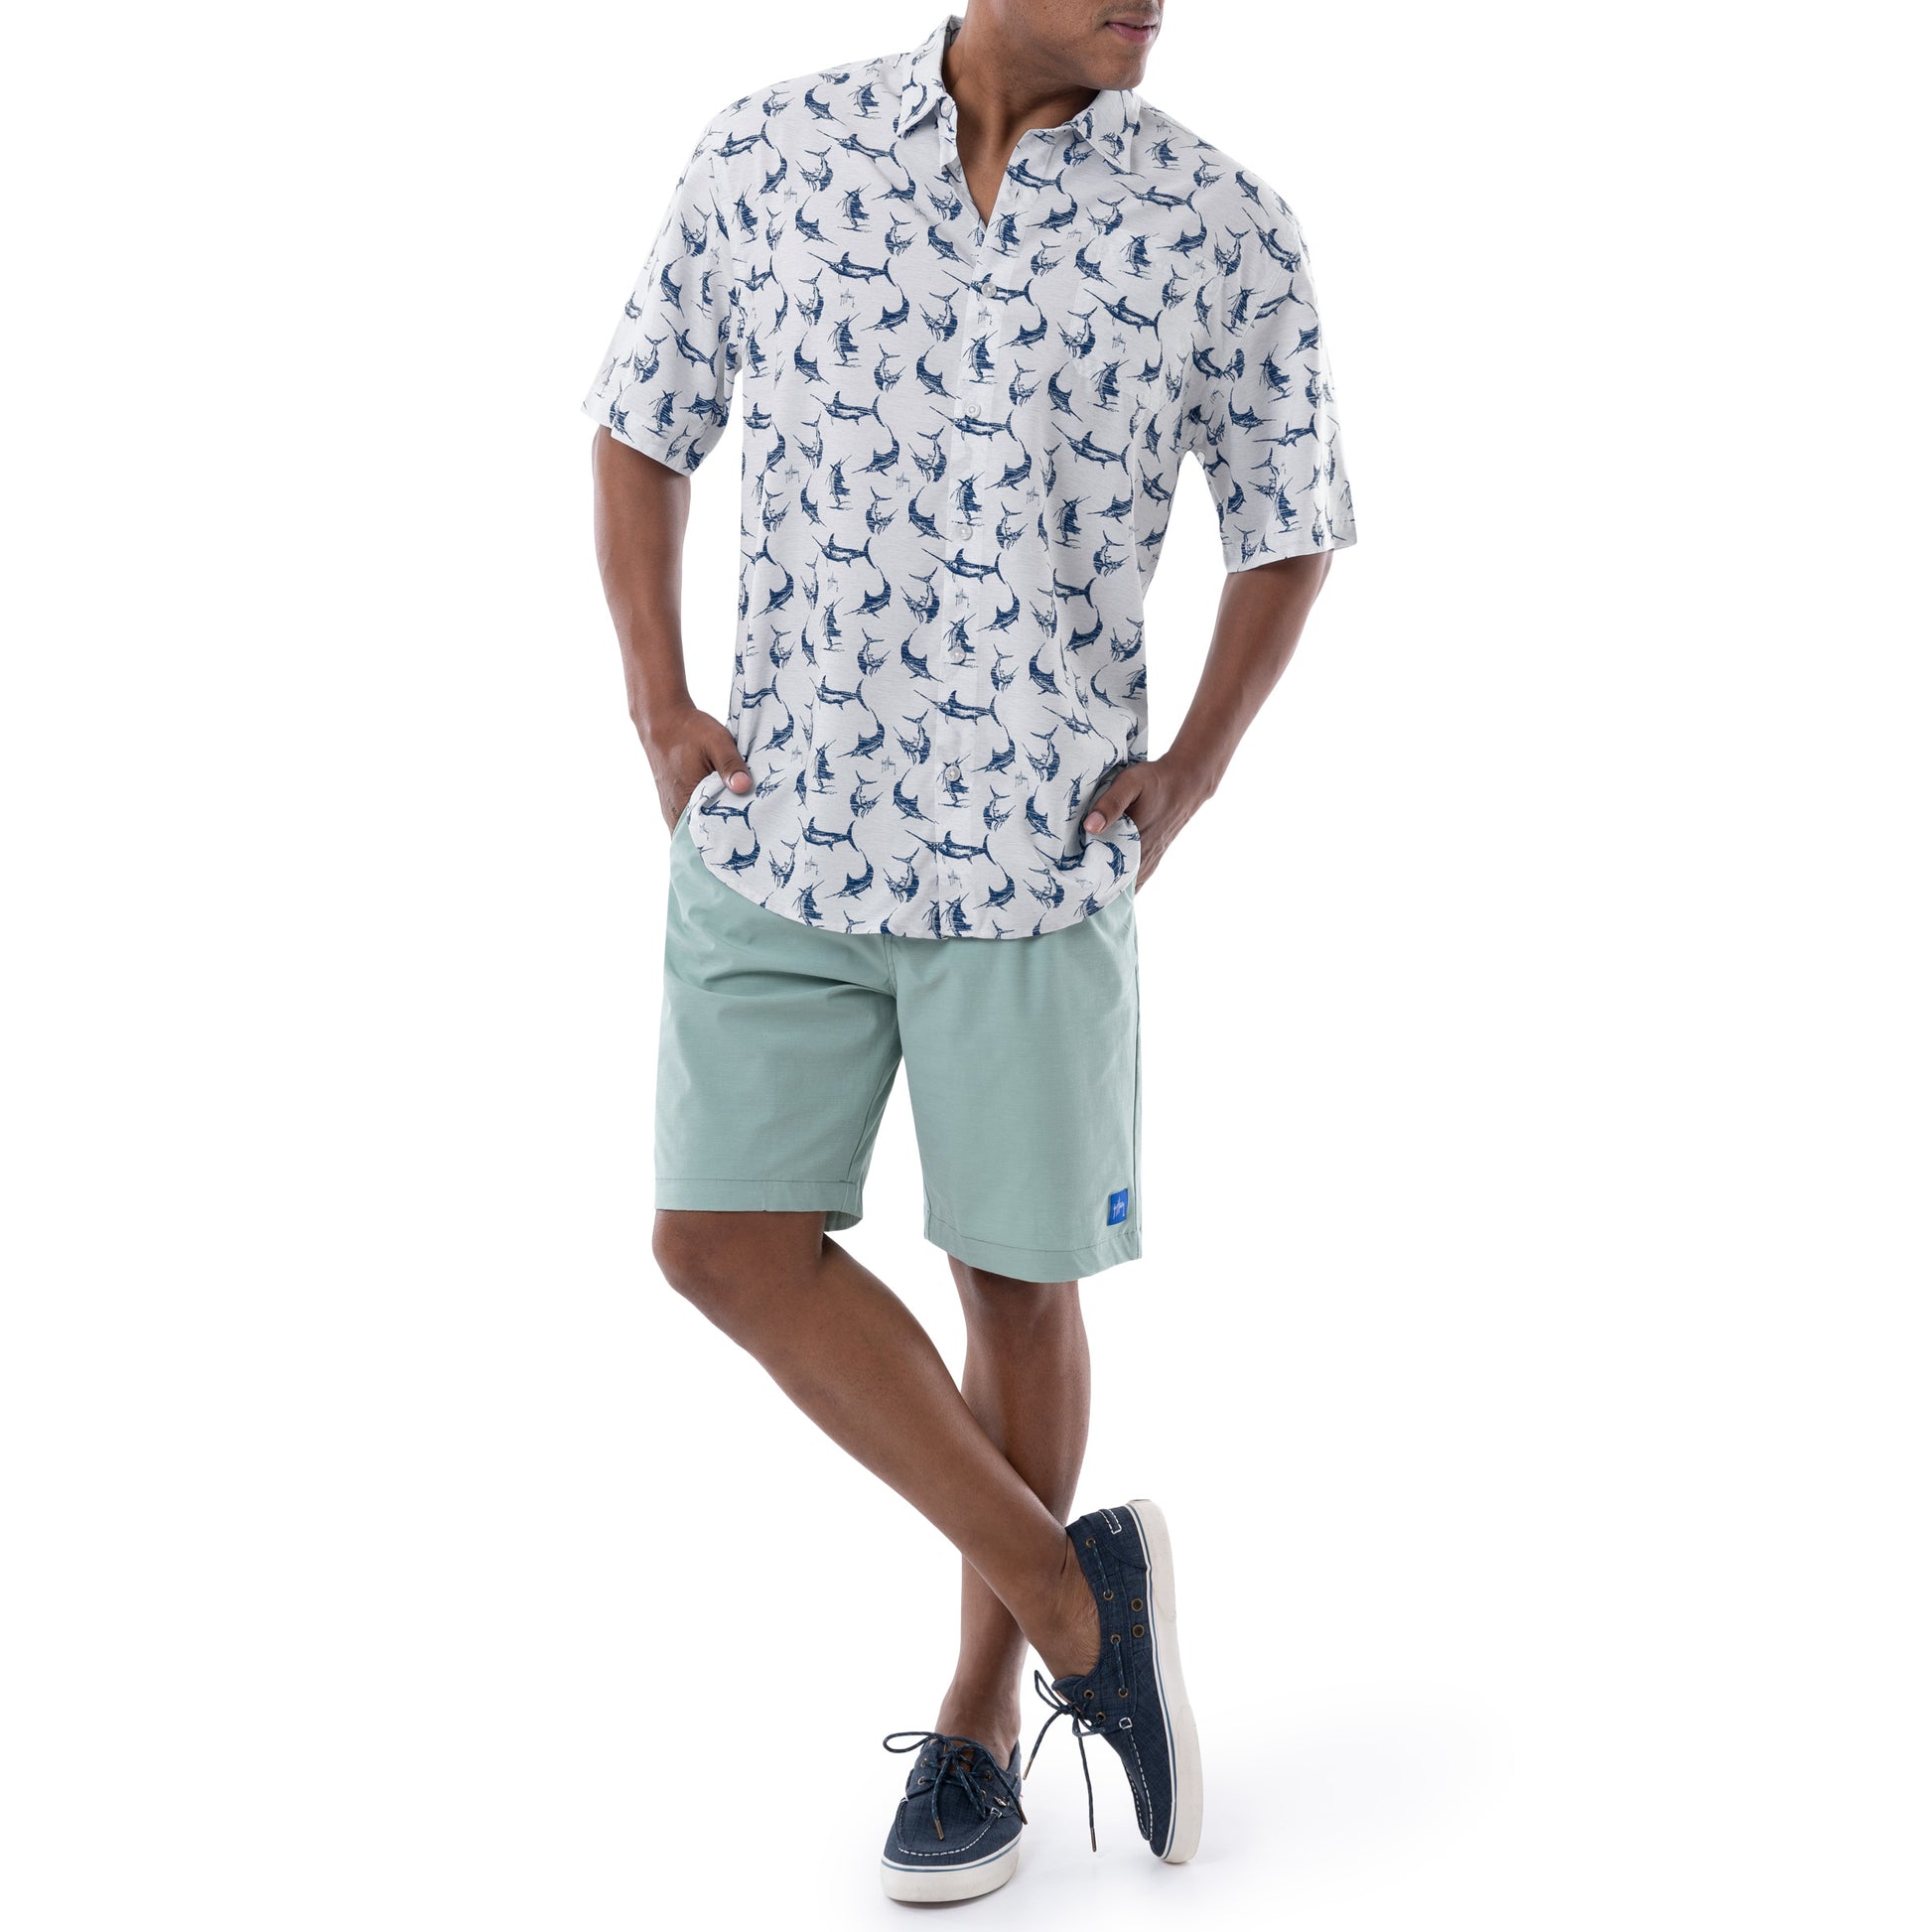 Vintage Magellan Sportswear, Bass Fish 90s Dad Shirt, Size XL, Nature Shirt,  Outdoors Shirt, Fishing Gshirt, Fisherman Shirt -  Norway